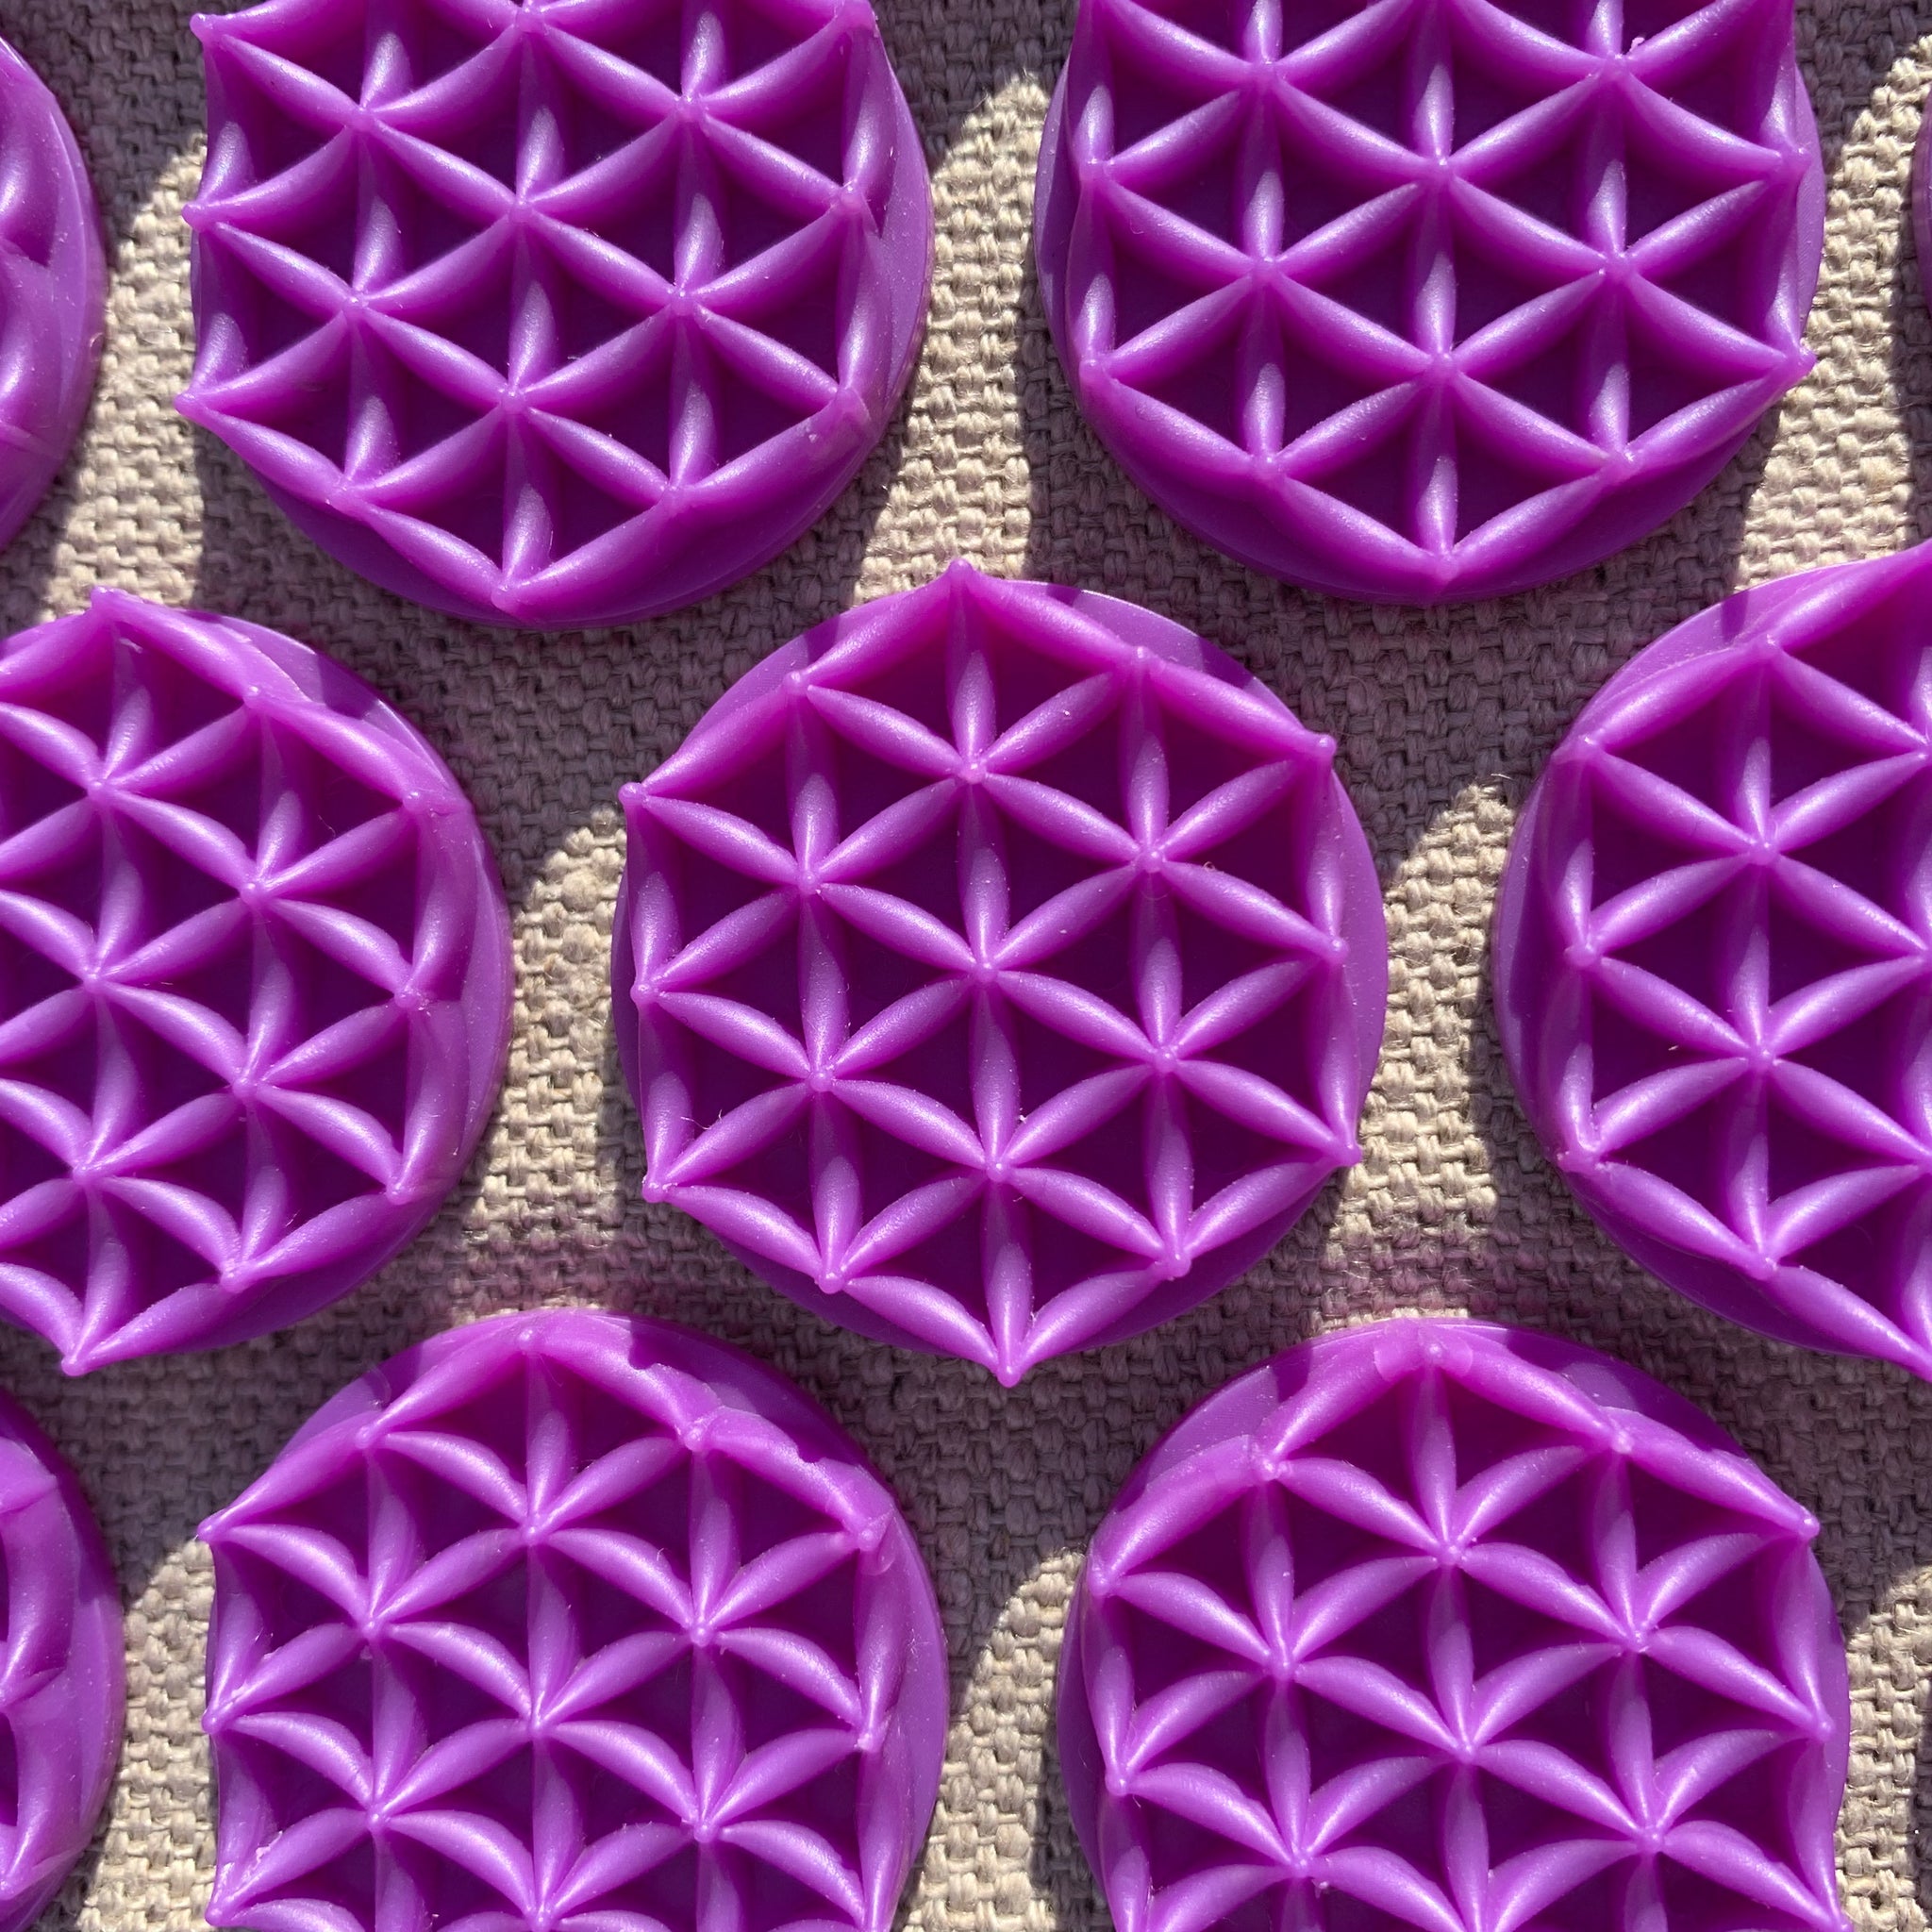 Close up shot of purple acupressure spikes